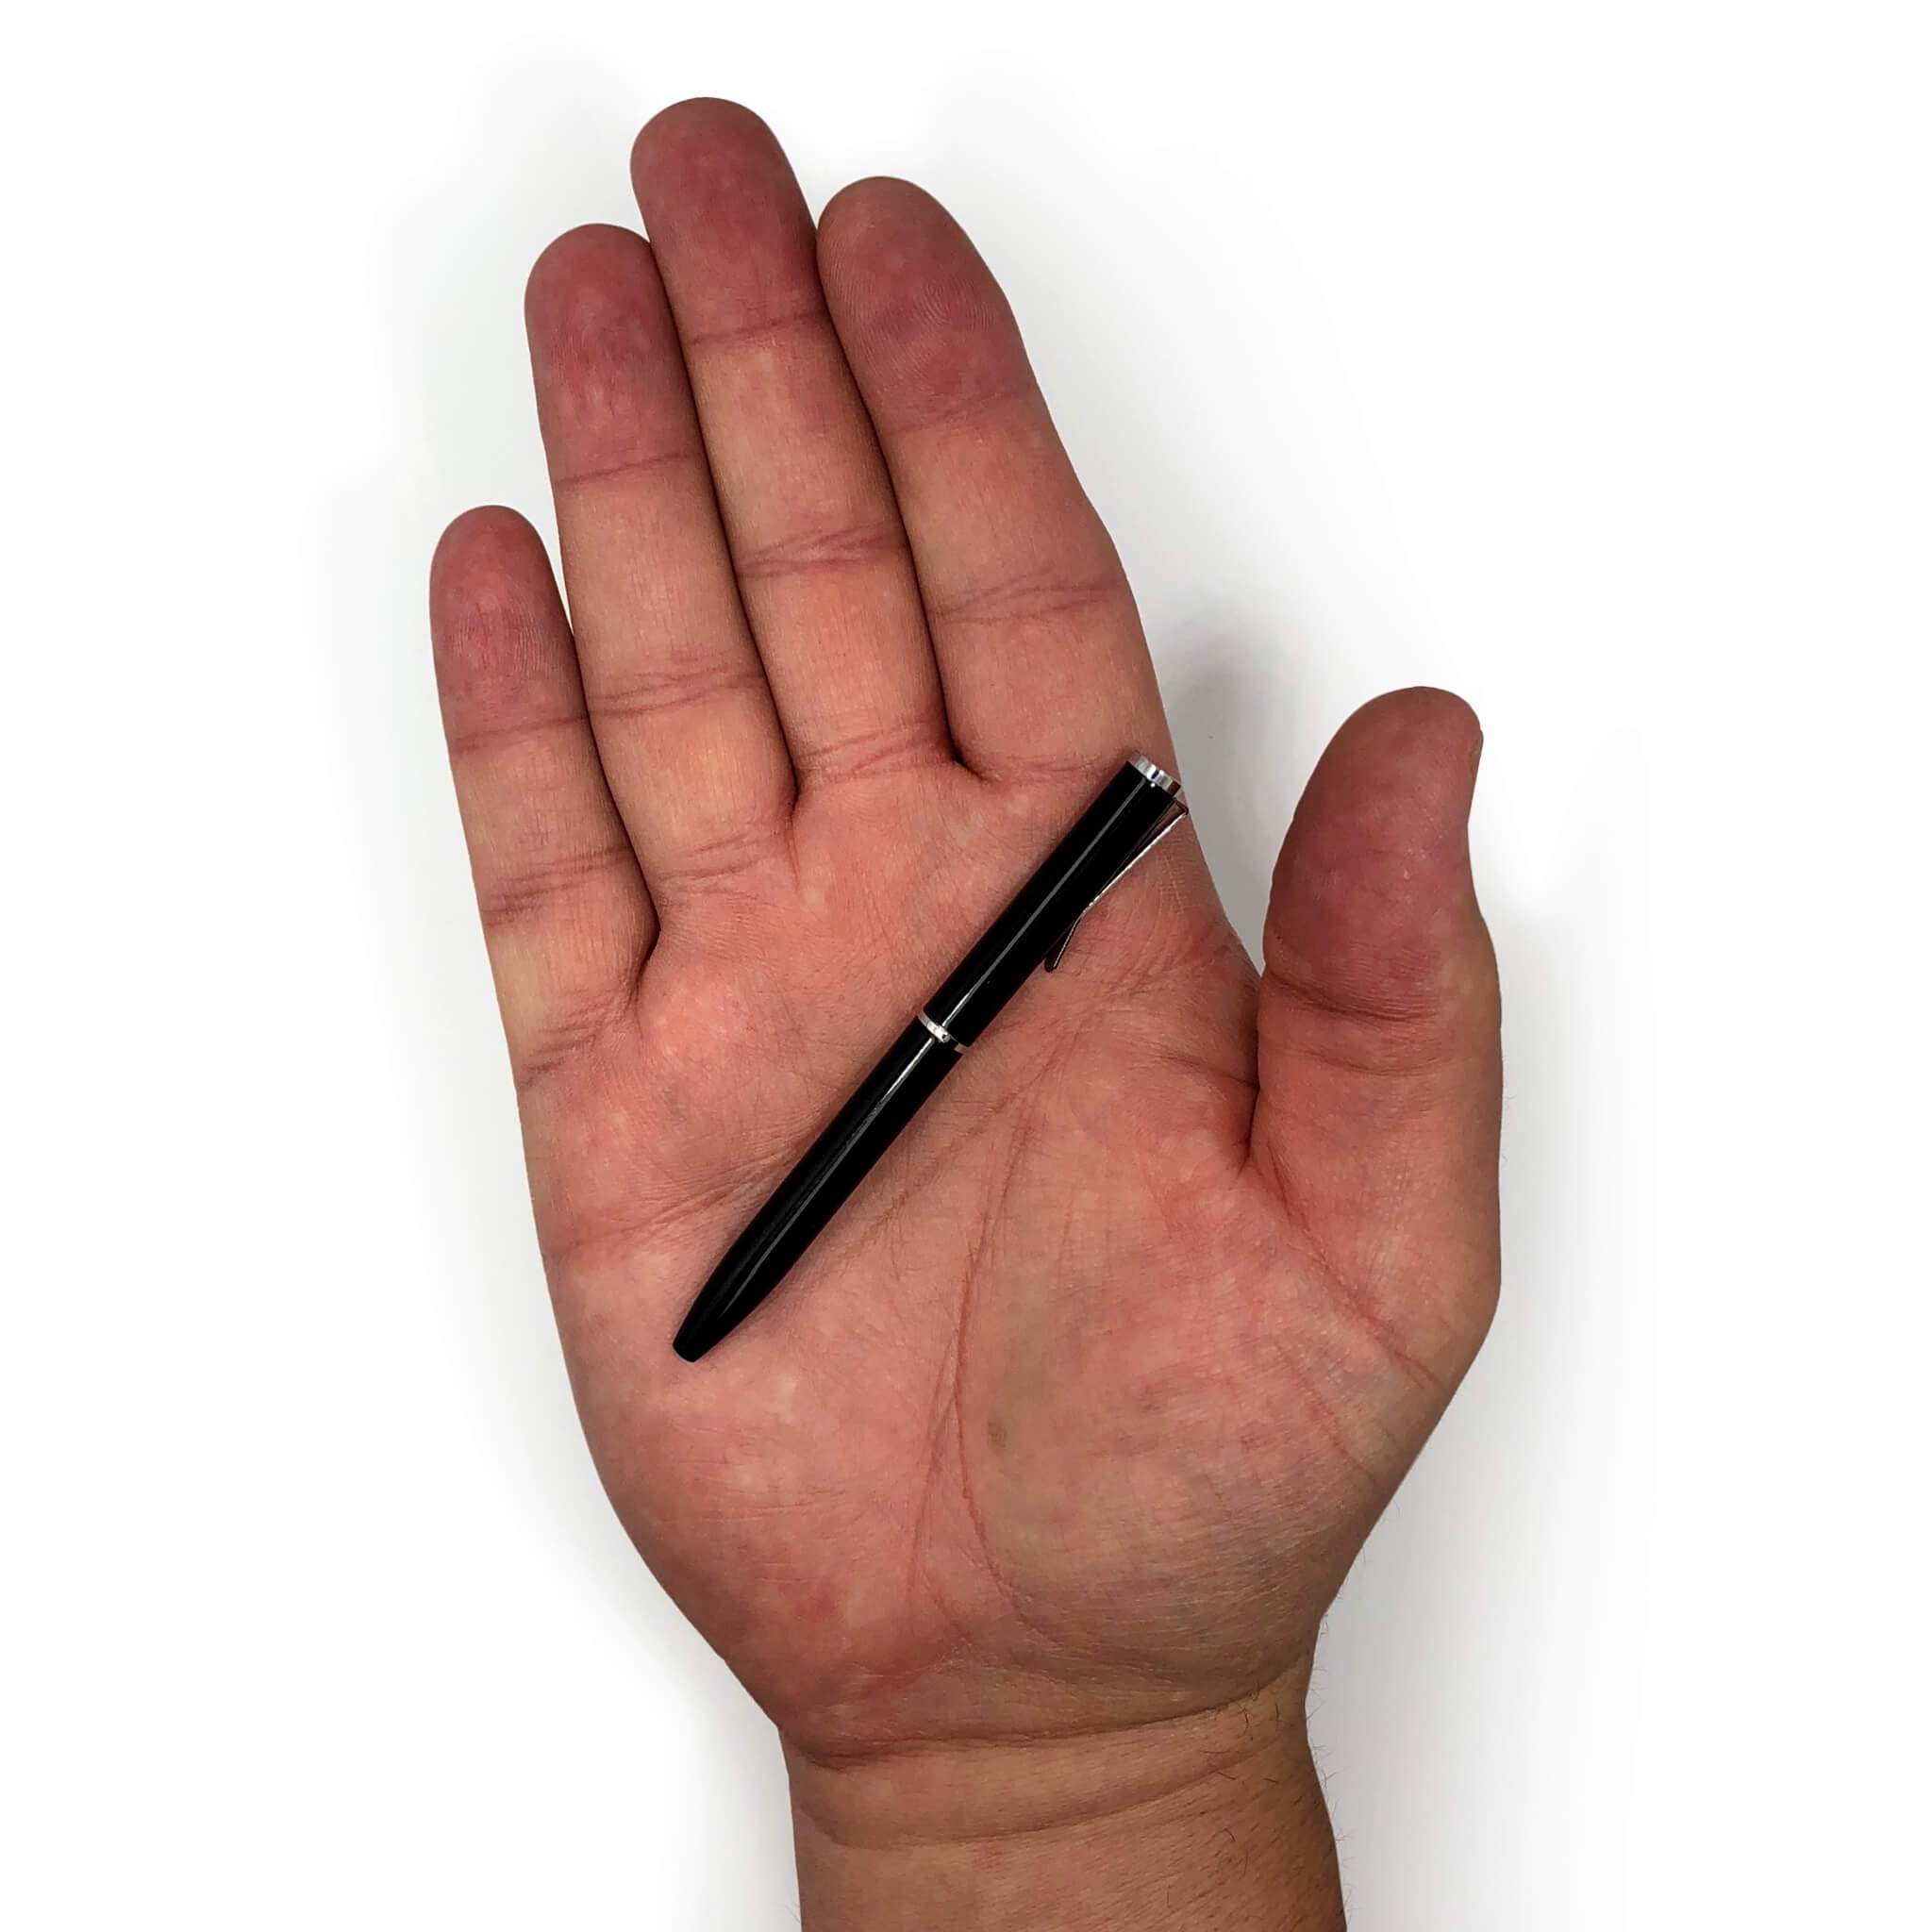 Black Flair Pen – Tiny and Snail